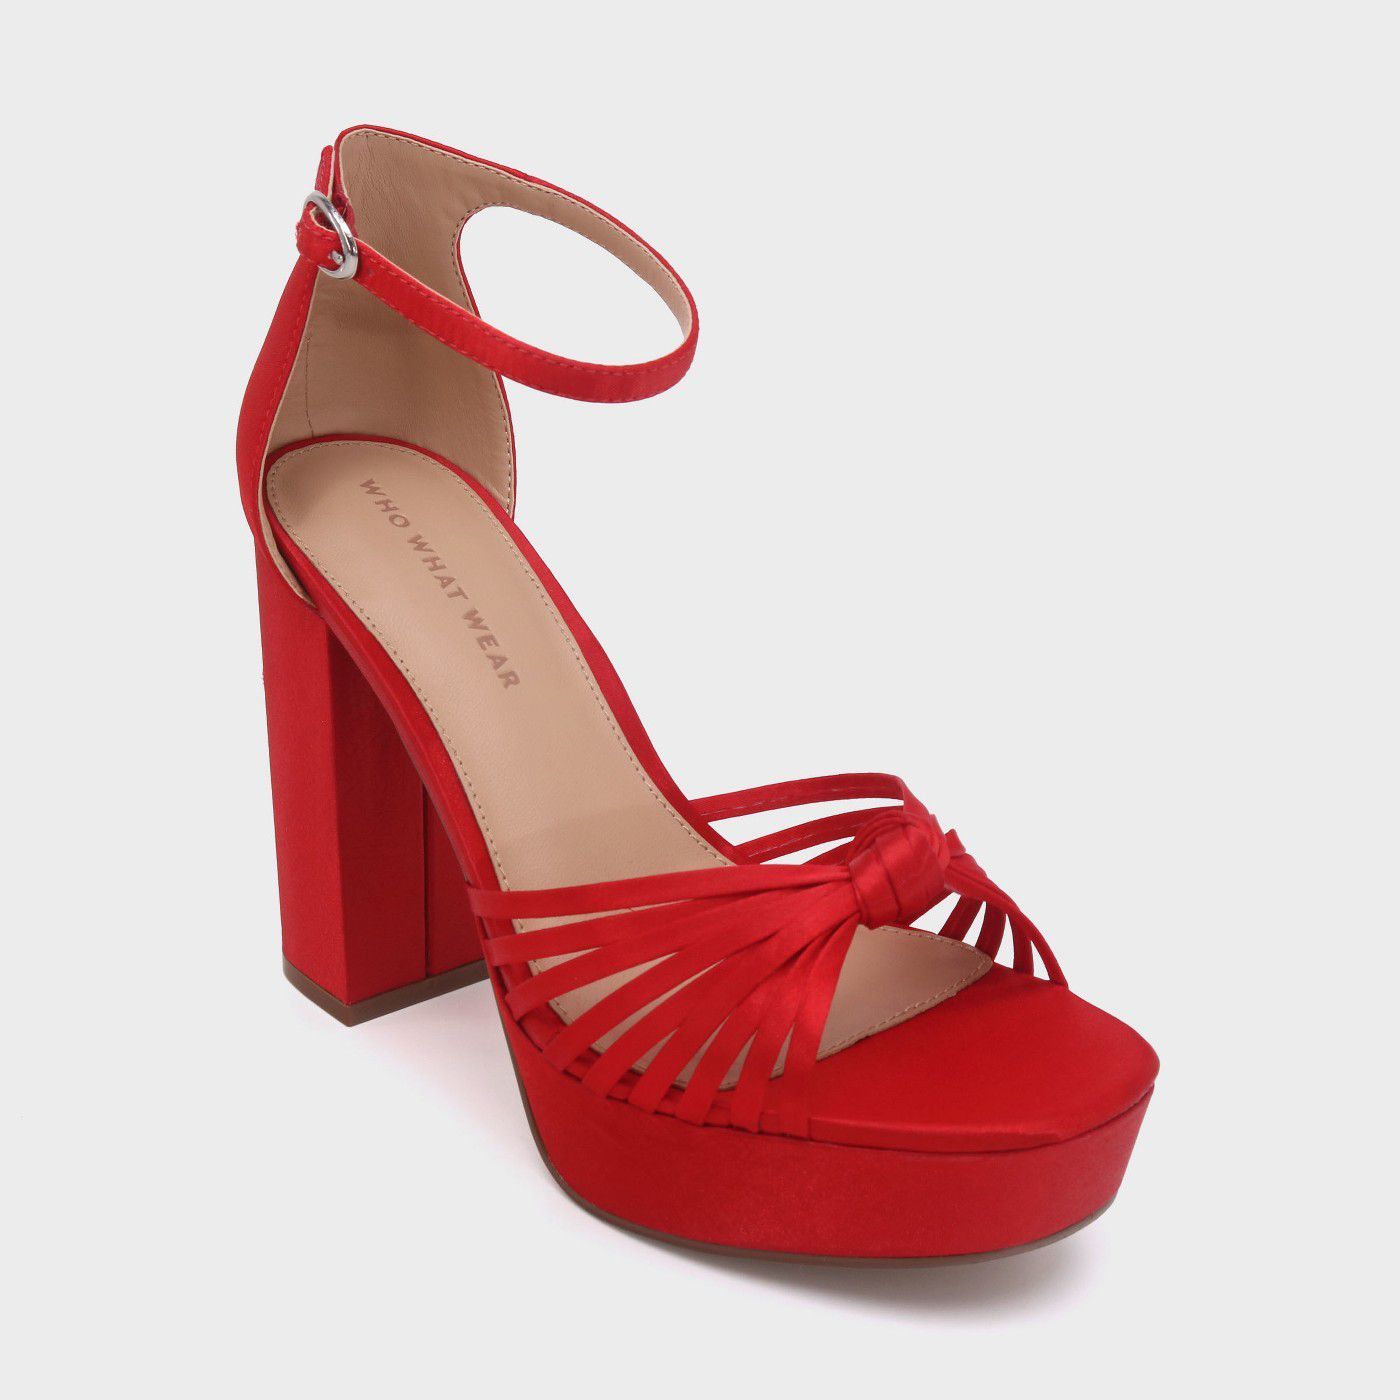 Women And Girls Fashion Sandal | Fashion sandals heels, Sandals heels,  Fashion sandals